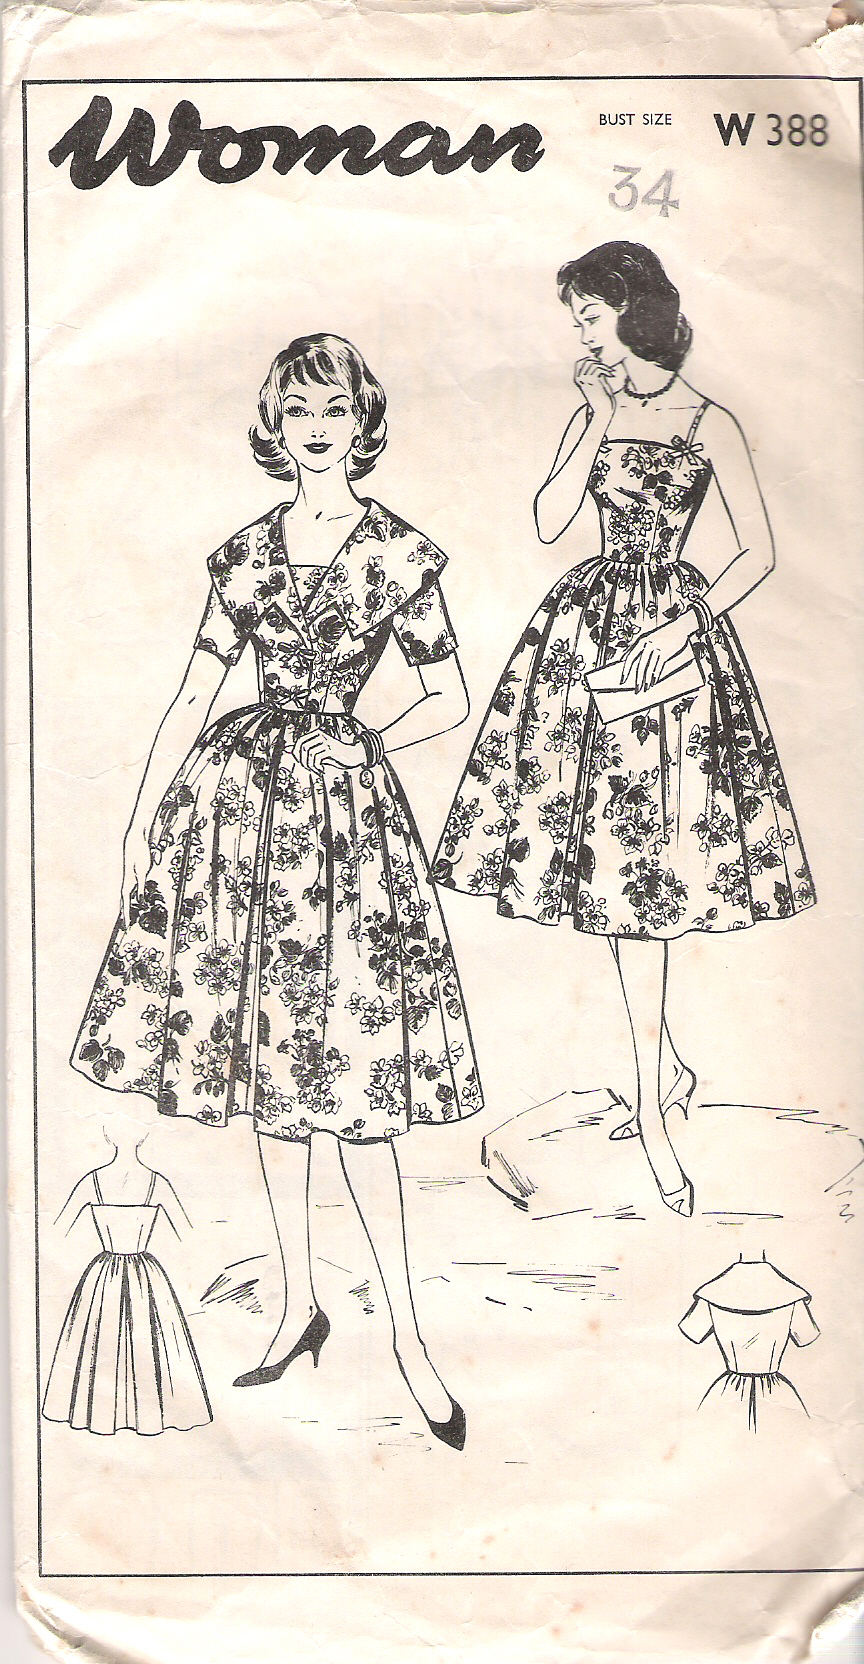 Justknits Ladies' and Girls' Underwear, Vintage Sewing Patterns